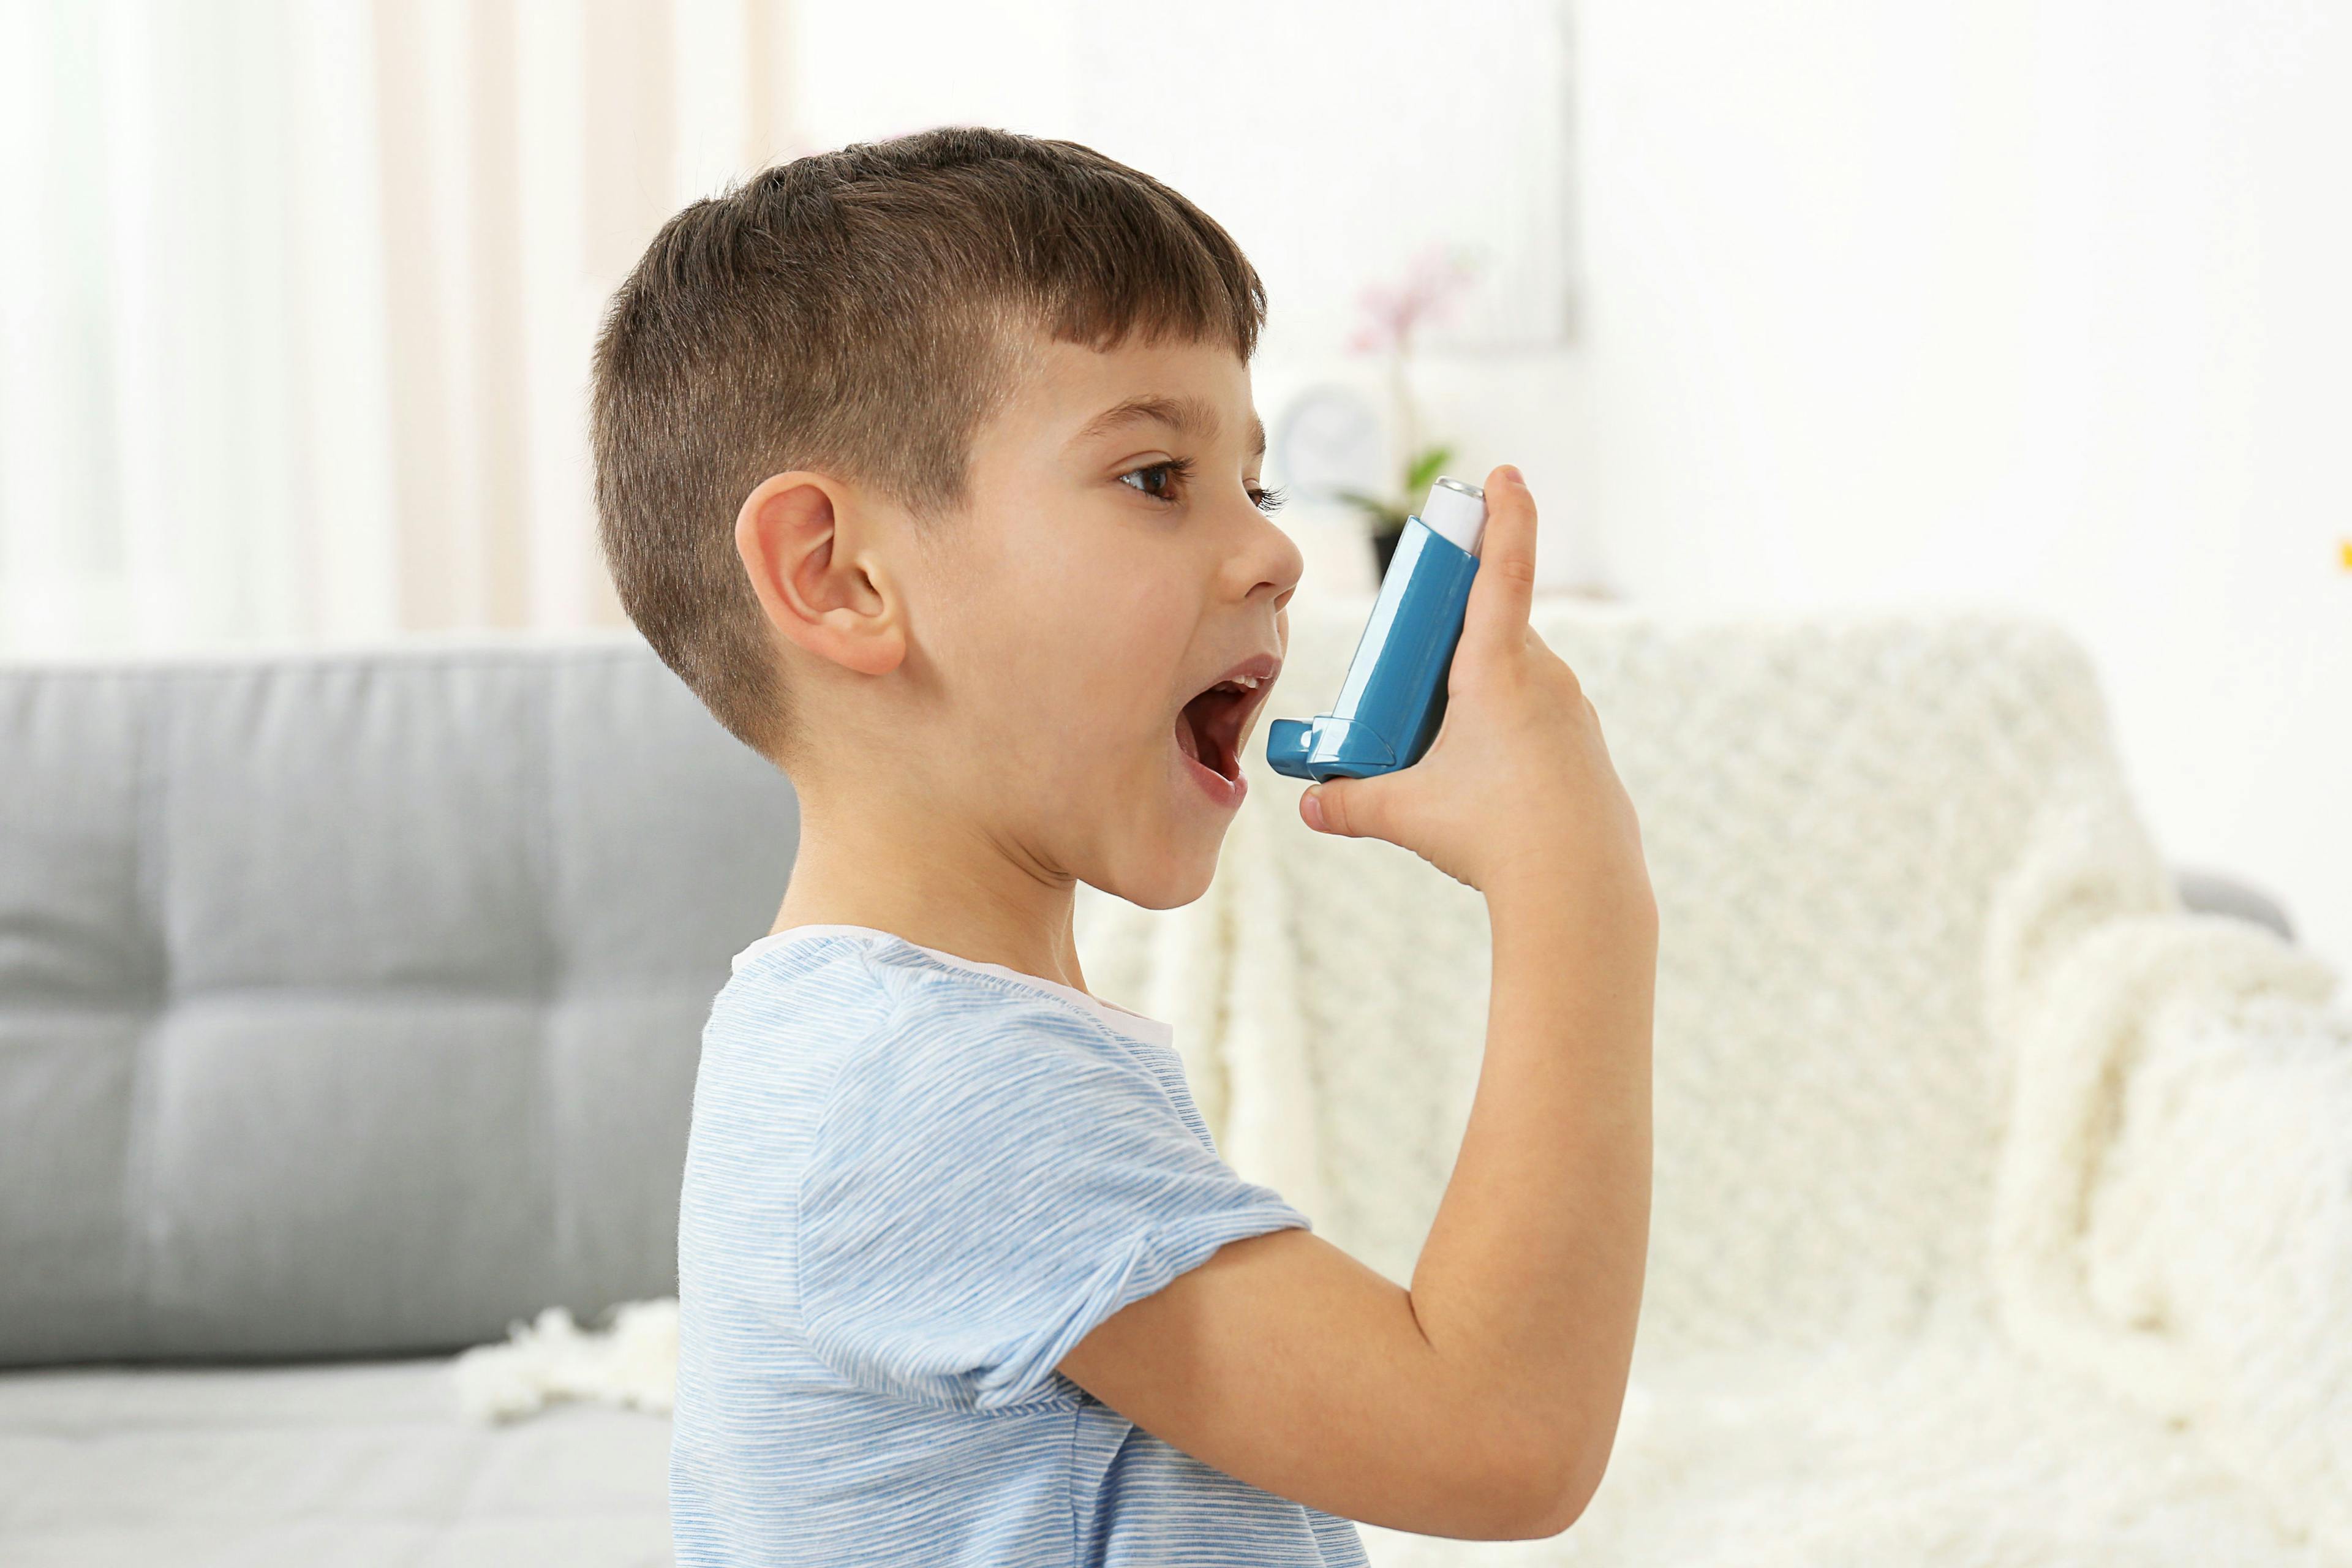 Boy using asthma inhaler -- Image credit: Africa Studio | stock.adobe.com